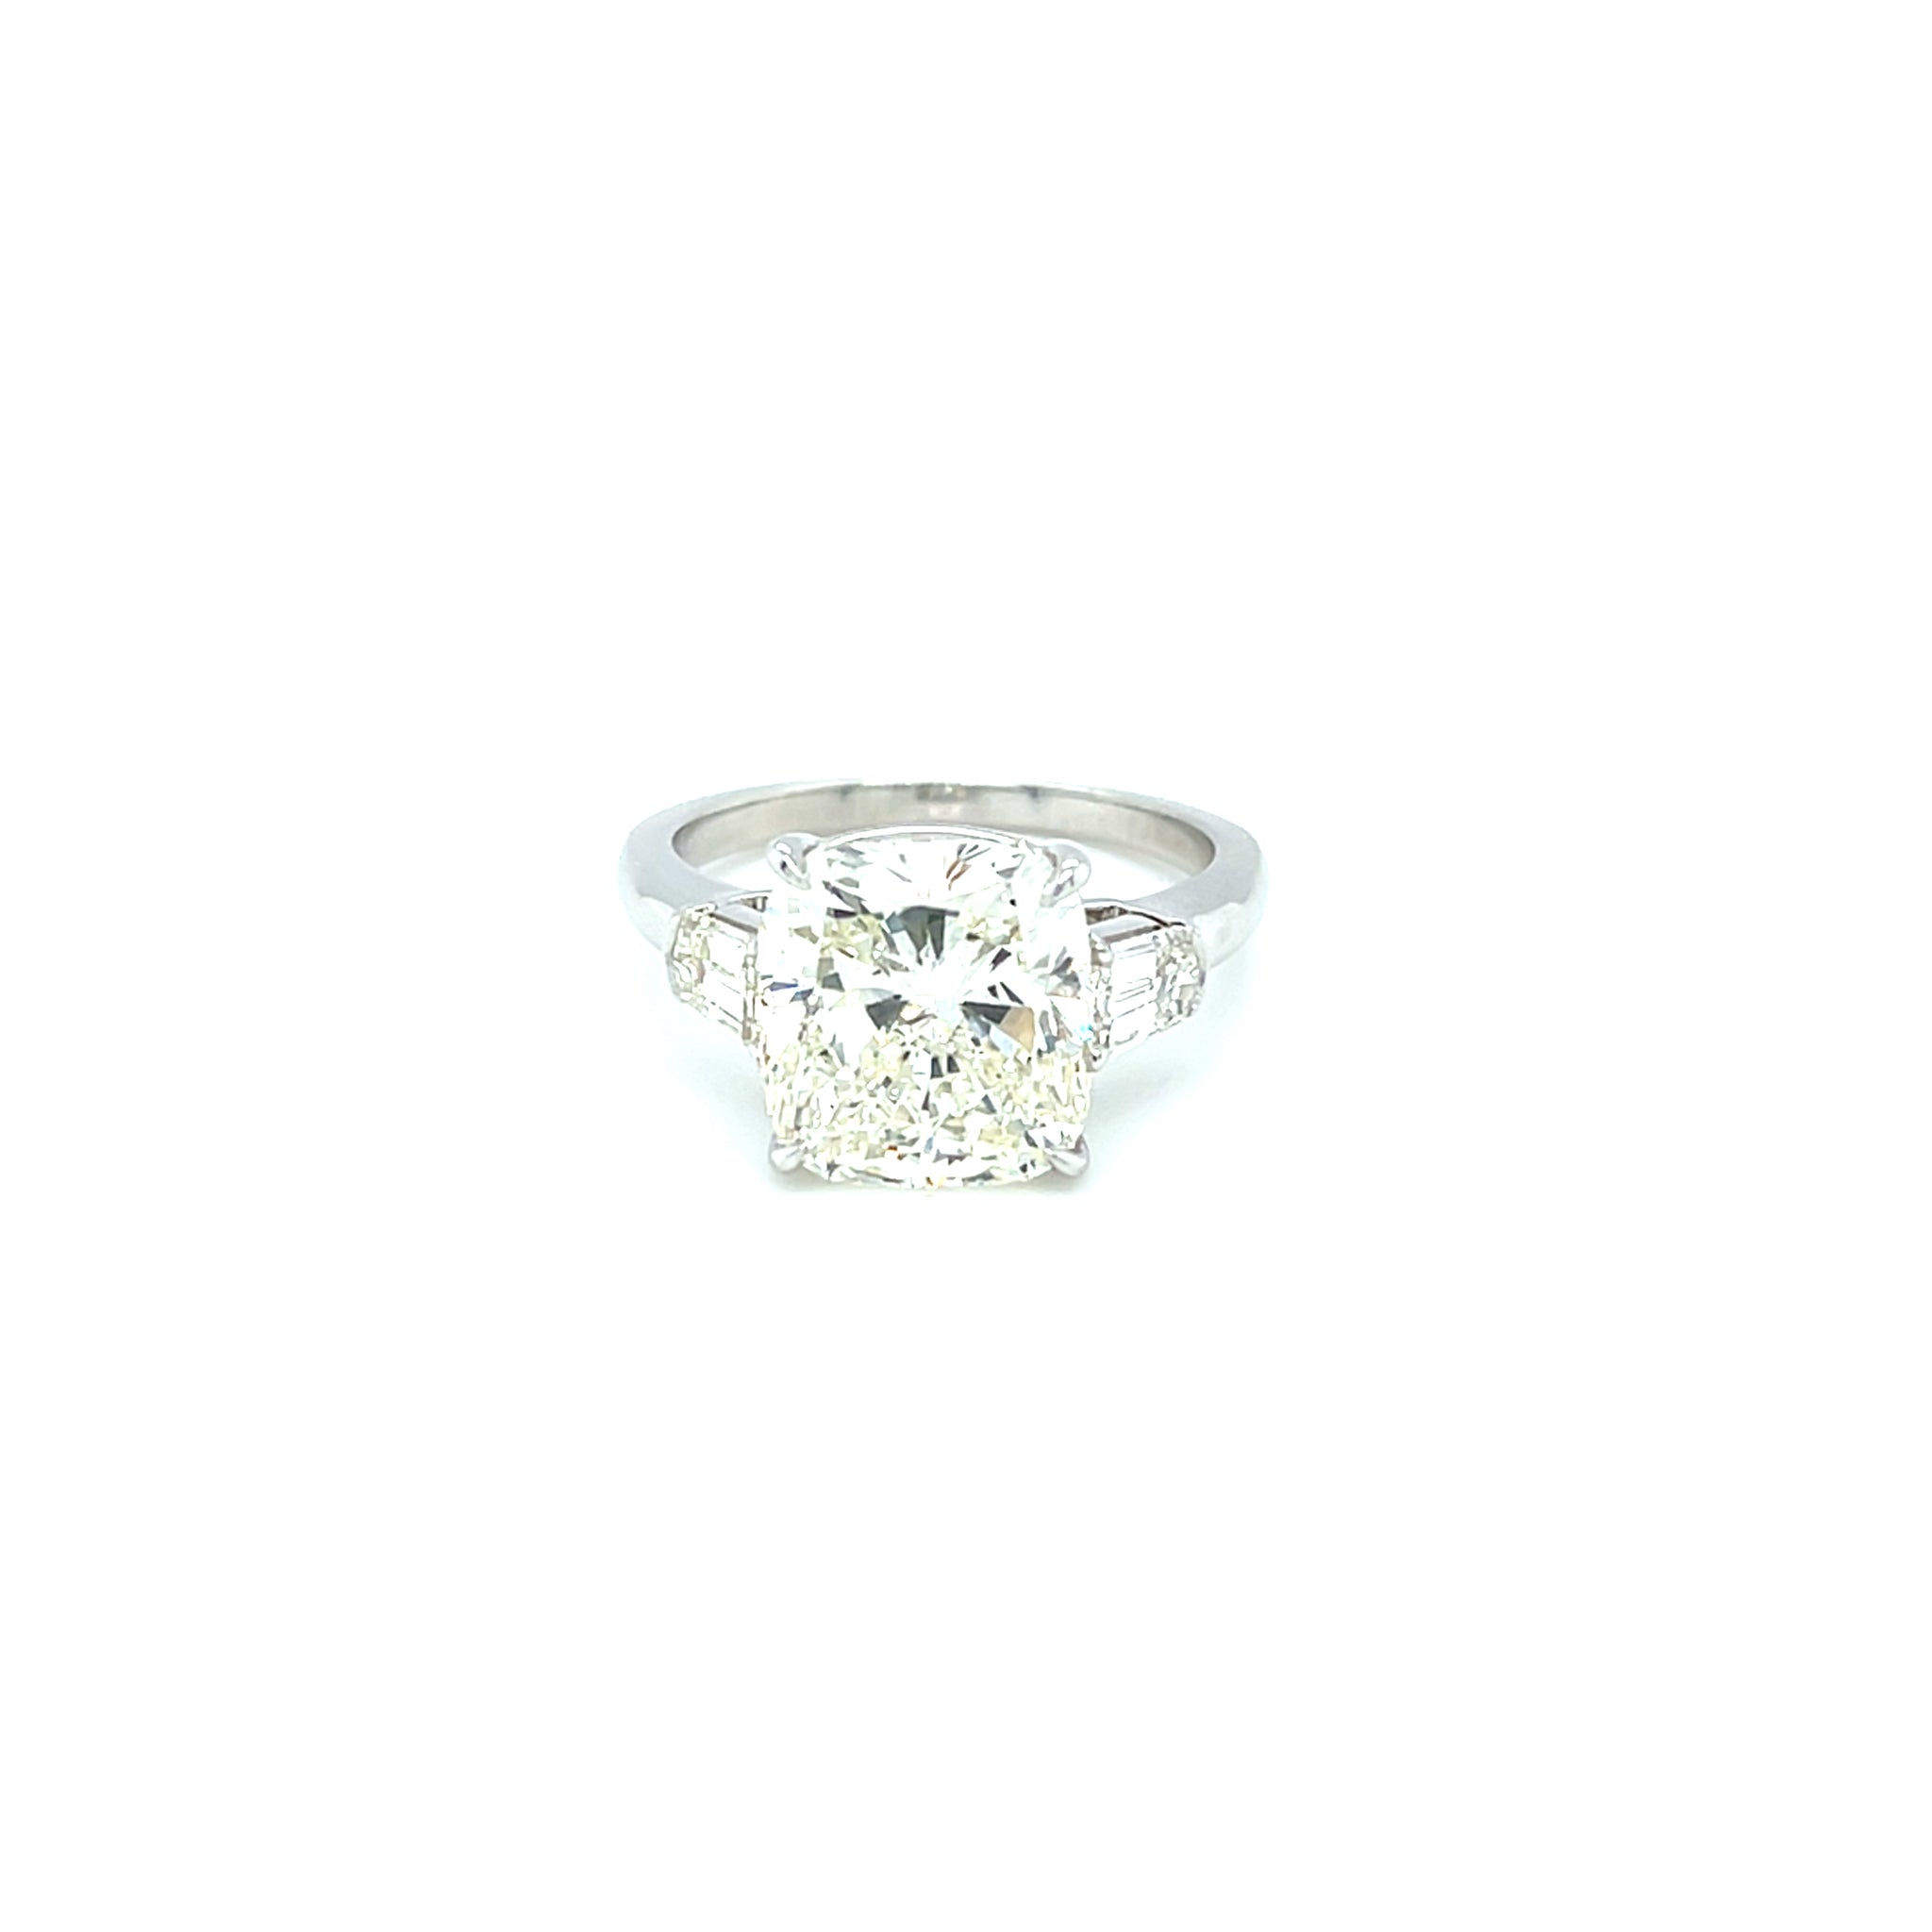 Platinum 5.05ct Cushion Diamond Engagement Ring with Bullet Diamond Side Stones